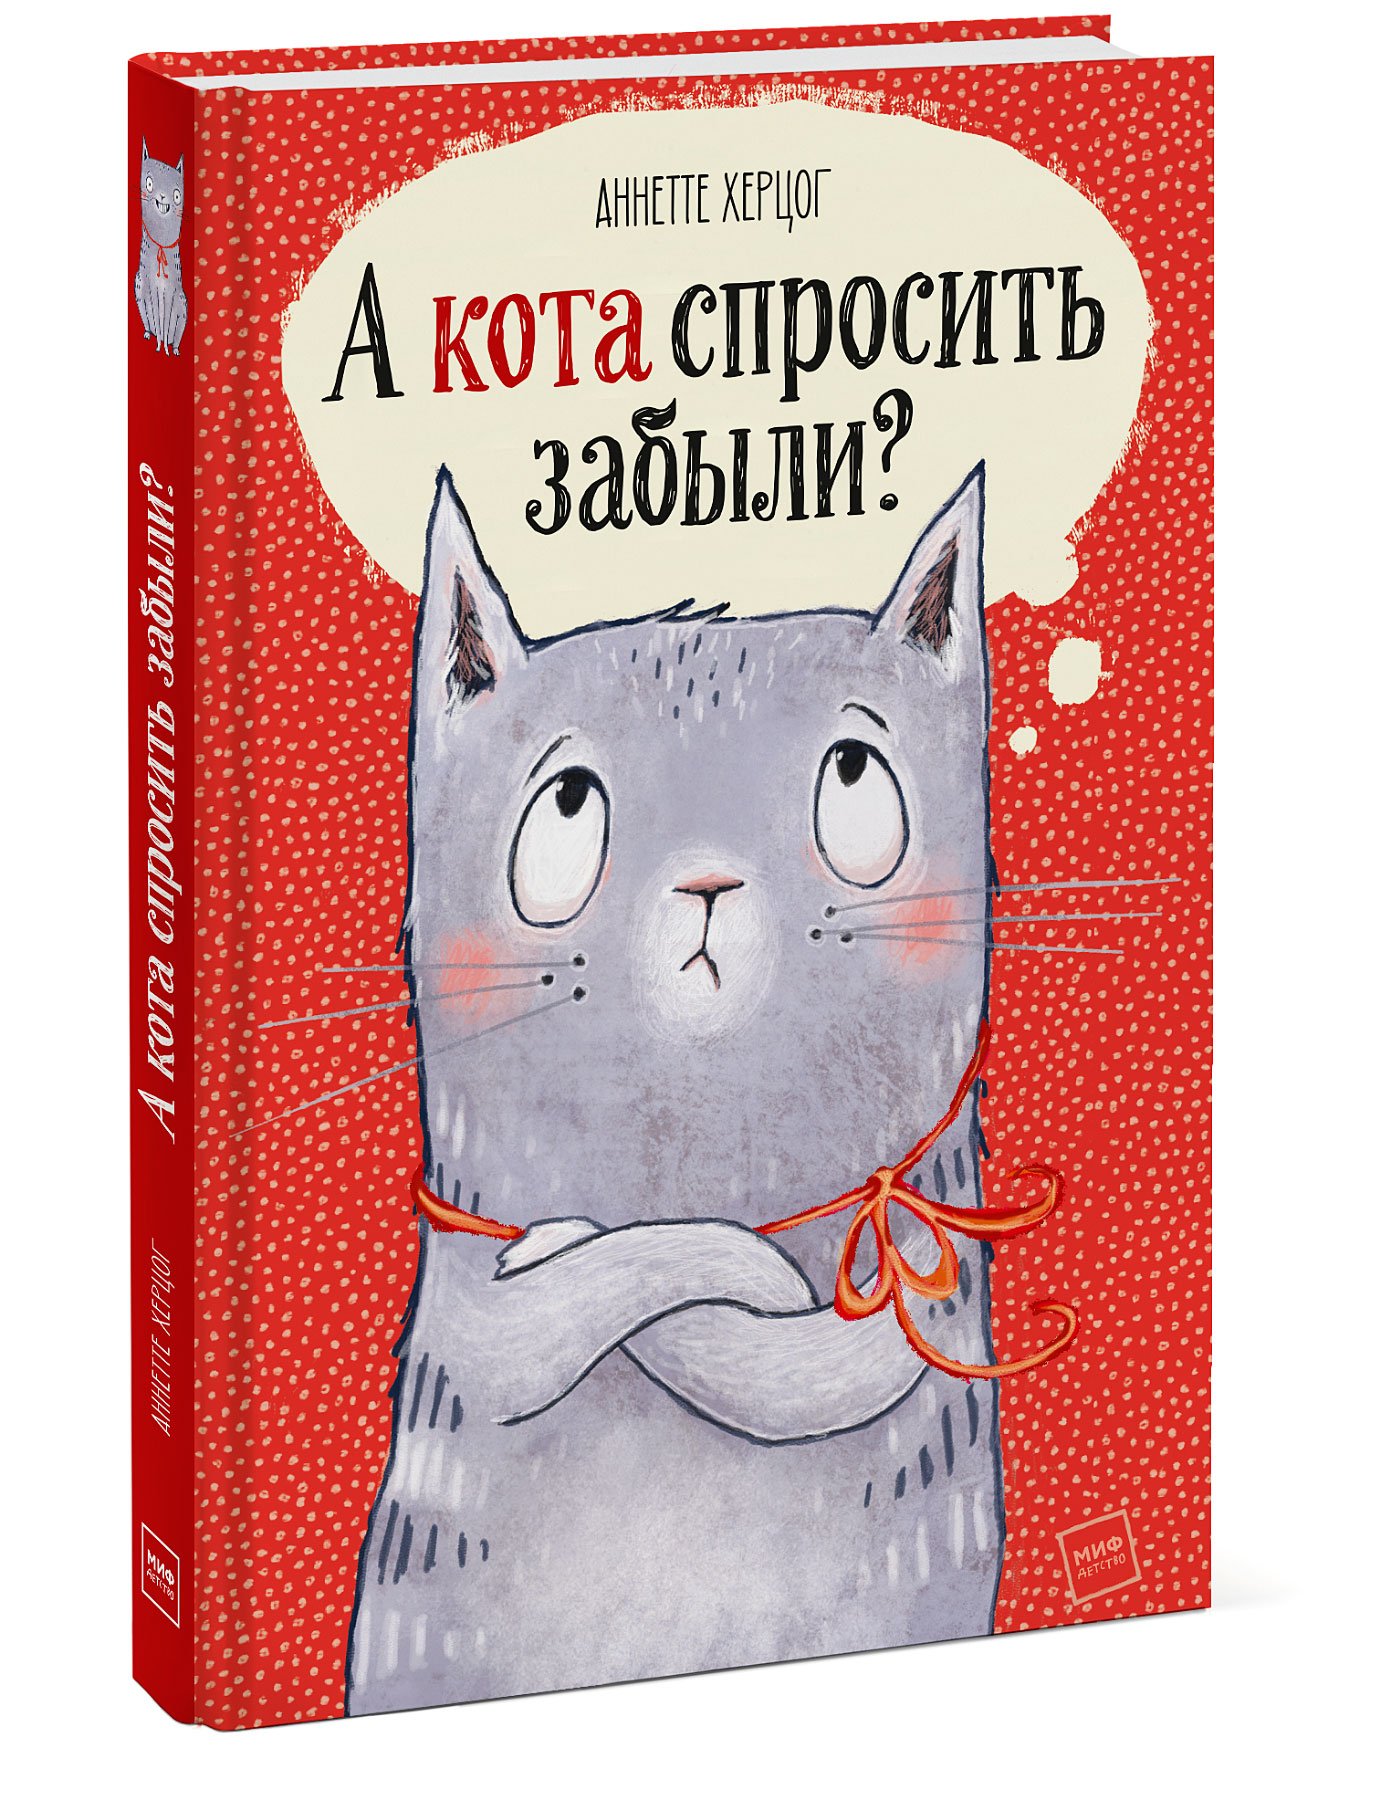 Zakazat.ru: А кота спросить забыли?. Херцог Аннетте